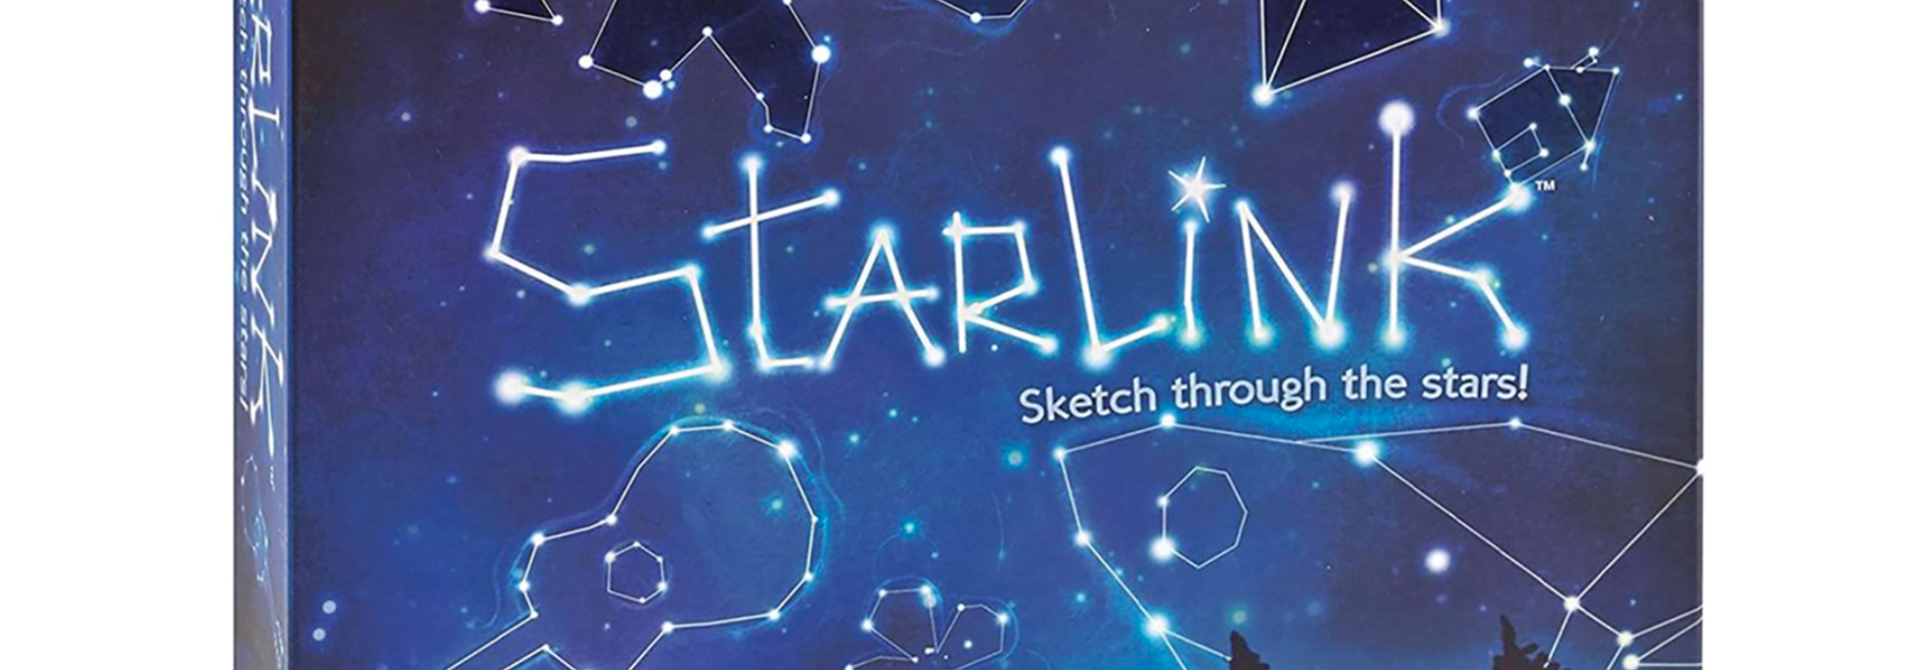 Starlink - Sketch Through the Stars